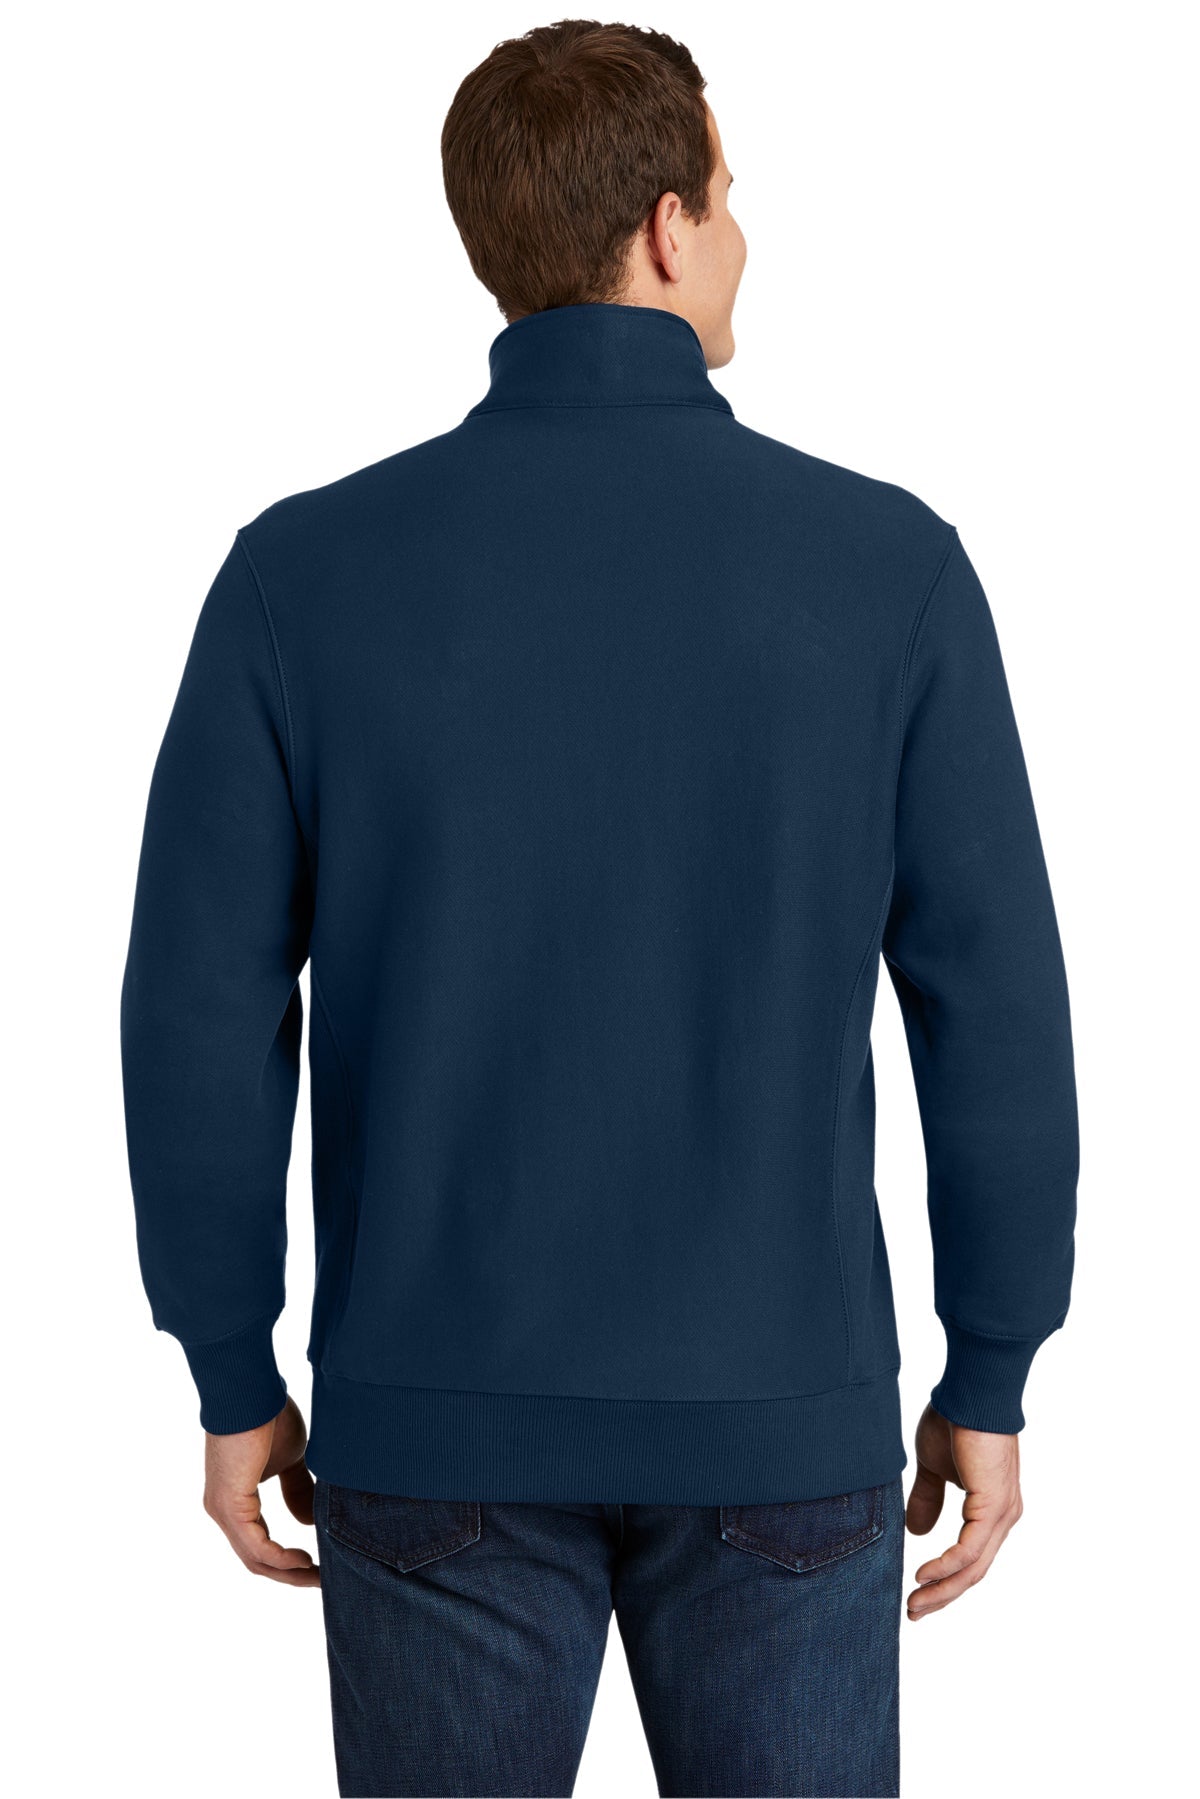 sport-tek_st283 _true navy_company_logo_sweatshirts